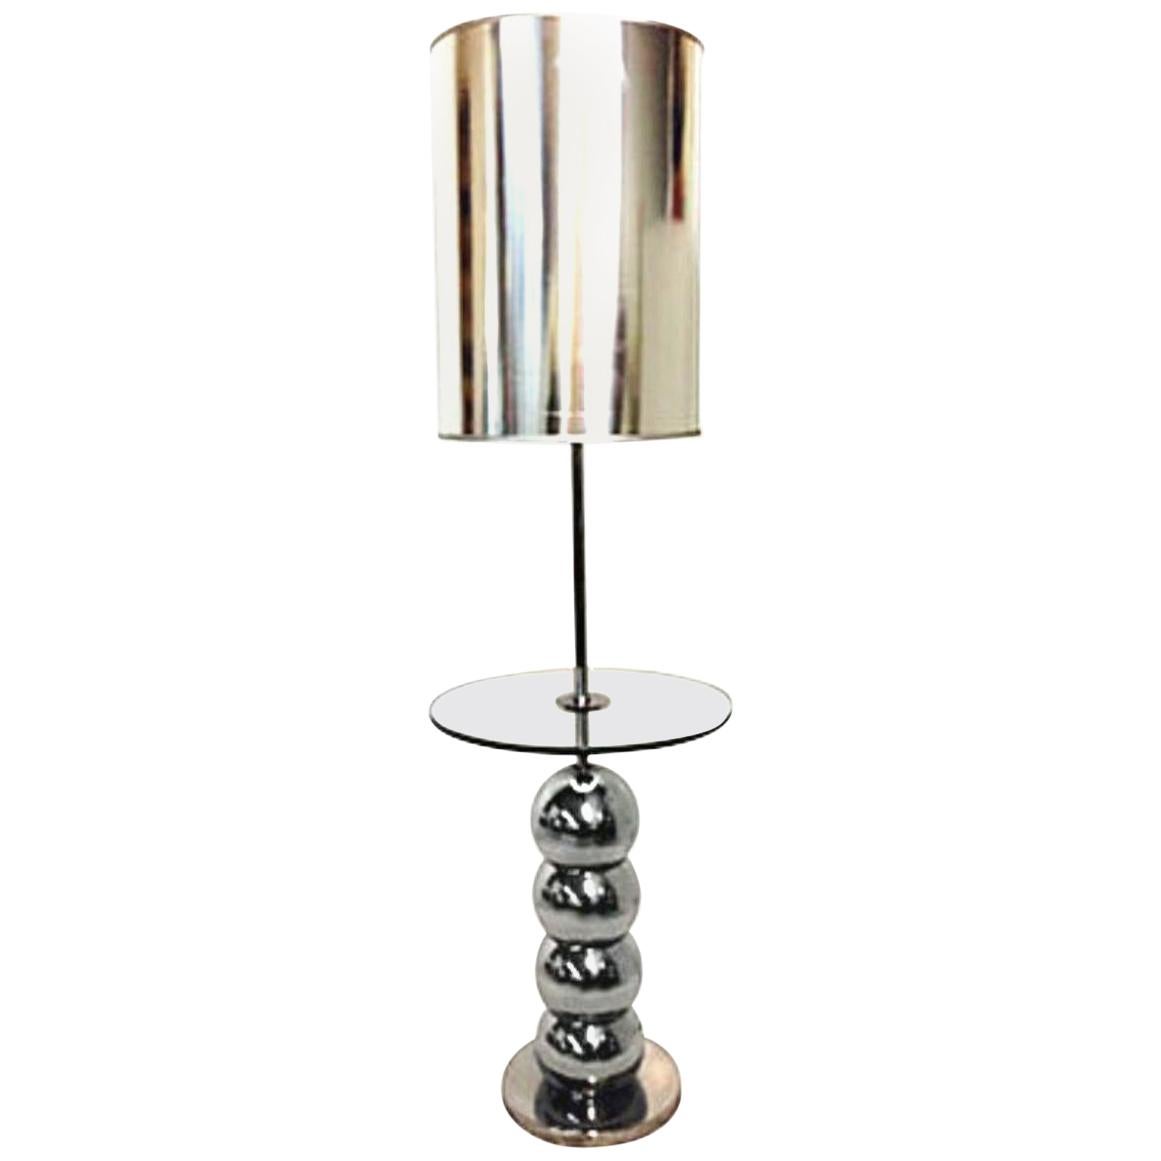 1960'S Chrome &Glass "Bubble" Table Floor Lamp's by Laurel